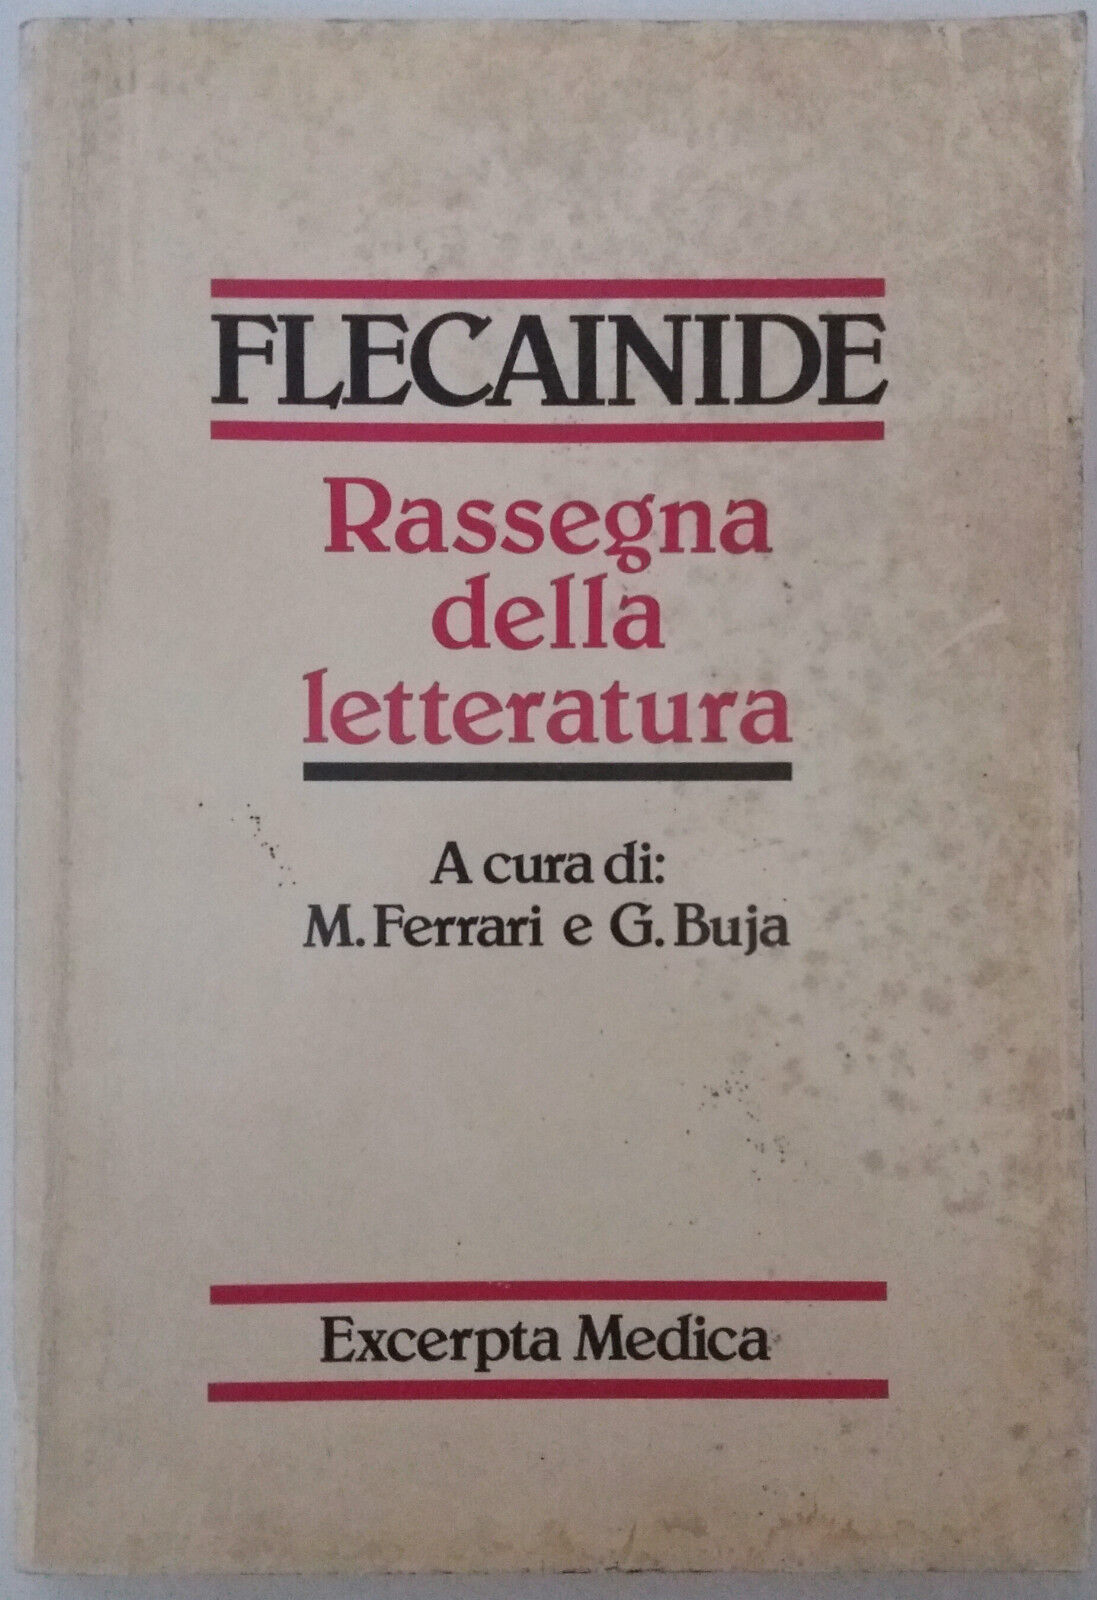 Flecainide, Rassegna della letteratura - AAv VV. - Excerpta Medica - 1986 - G